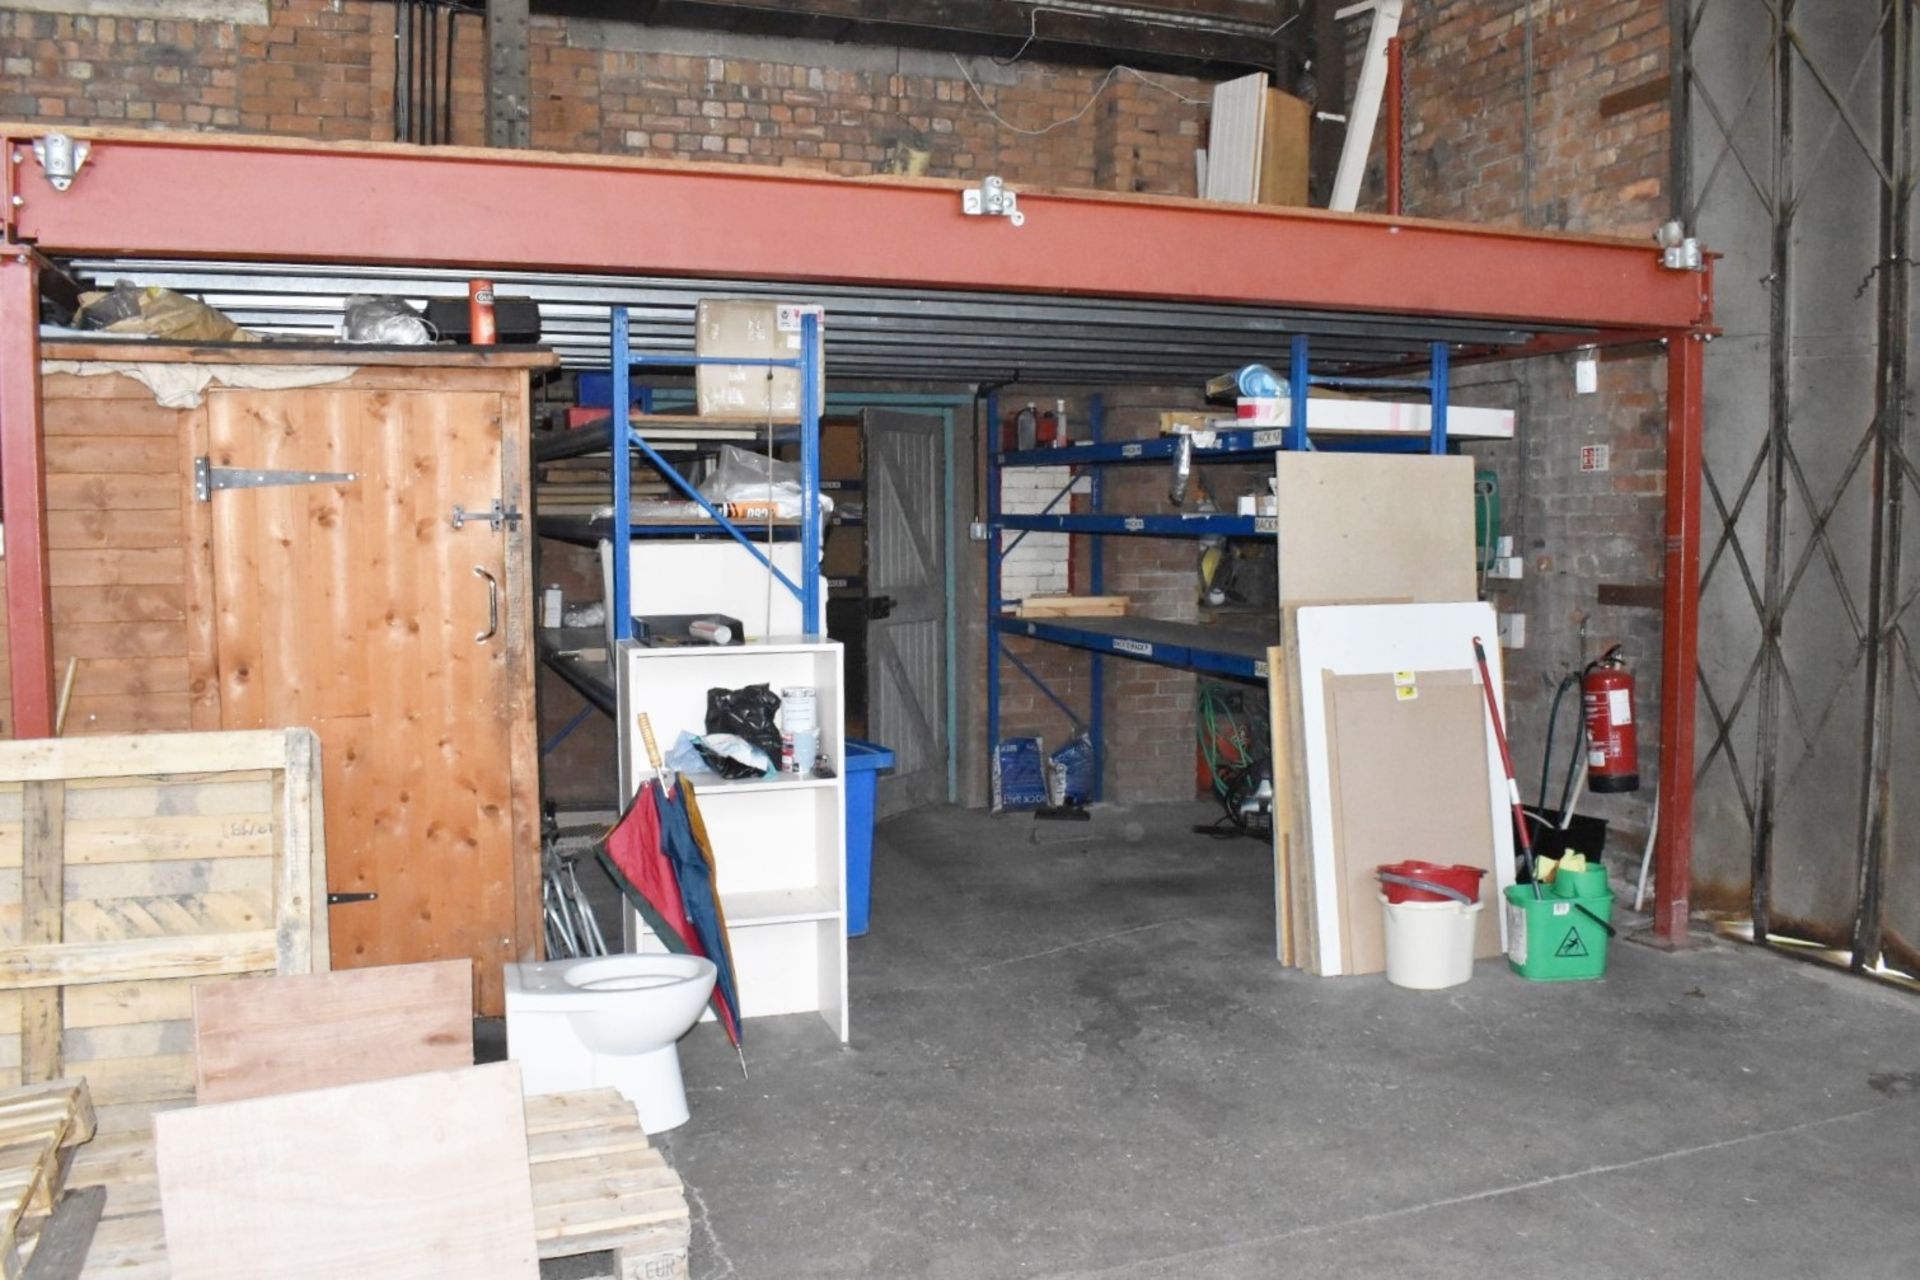 1 x Mezzanine Floor - Heavy Duty Steel Construction With Access Ladder - Size: W1000 x D325 cms - Image 11 of 18